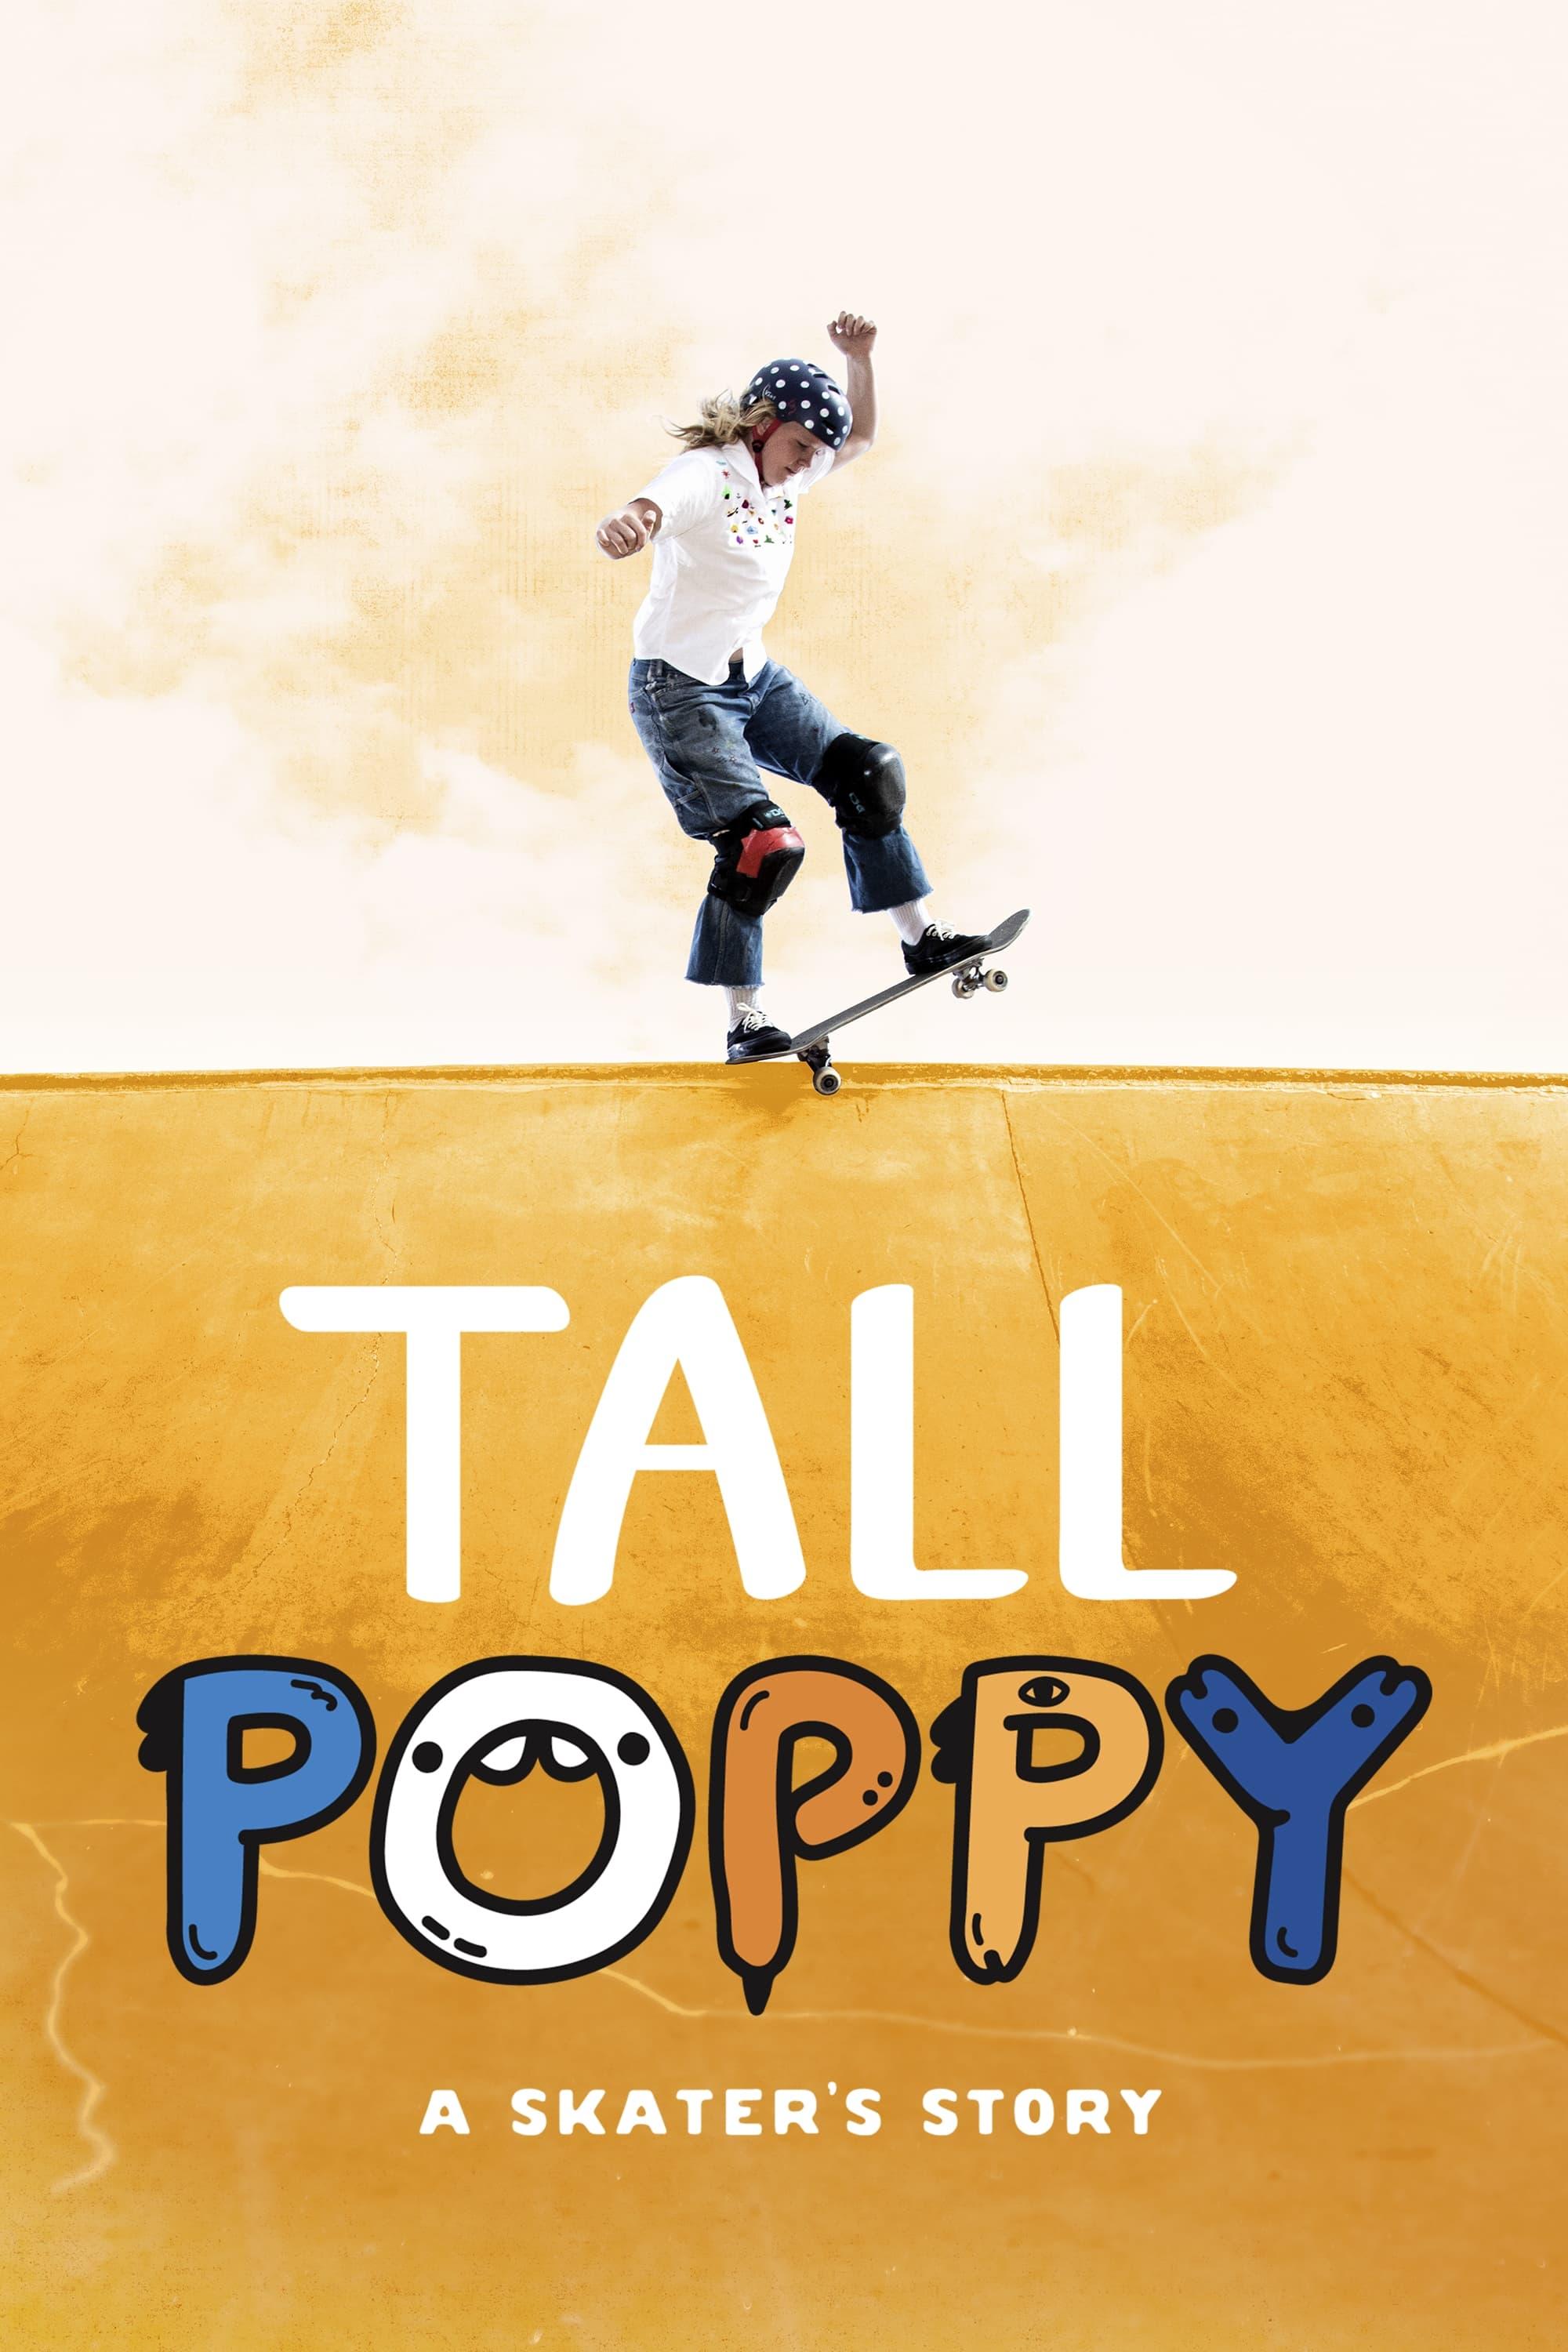 Tall Poppy: A Skater's Story poster